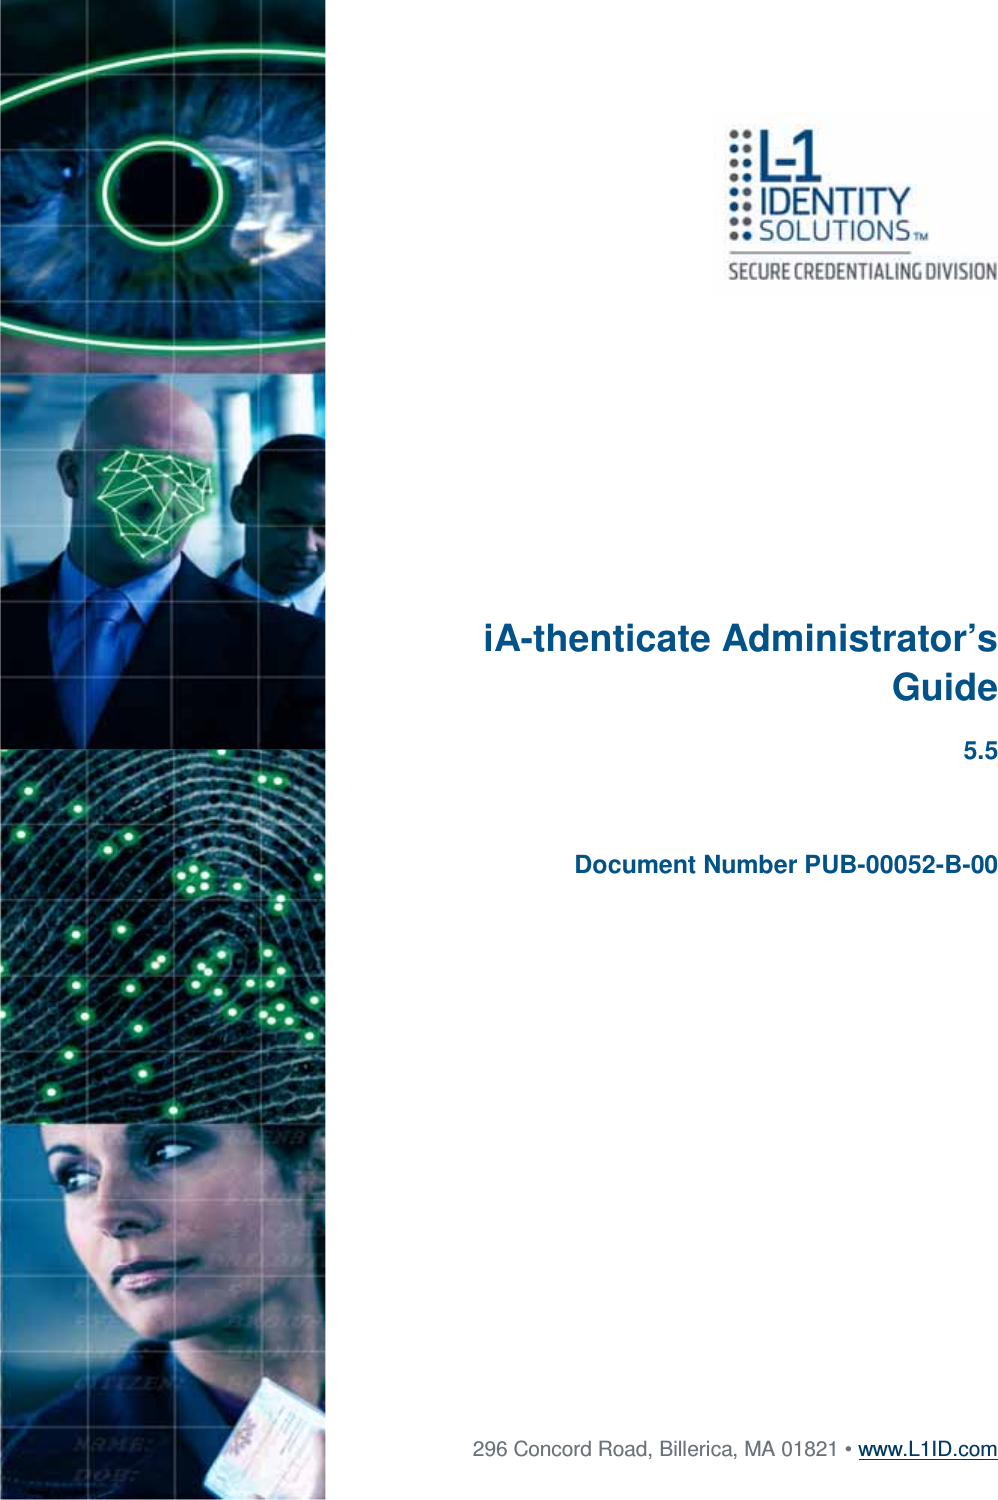 148                         iA-thenticate Administrator’s Guide5.5  Document Number PUB-00052-B-00 296 Concord Road, Billerica, MA 01821 • www.L1ID.com 